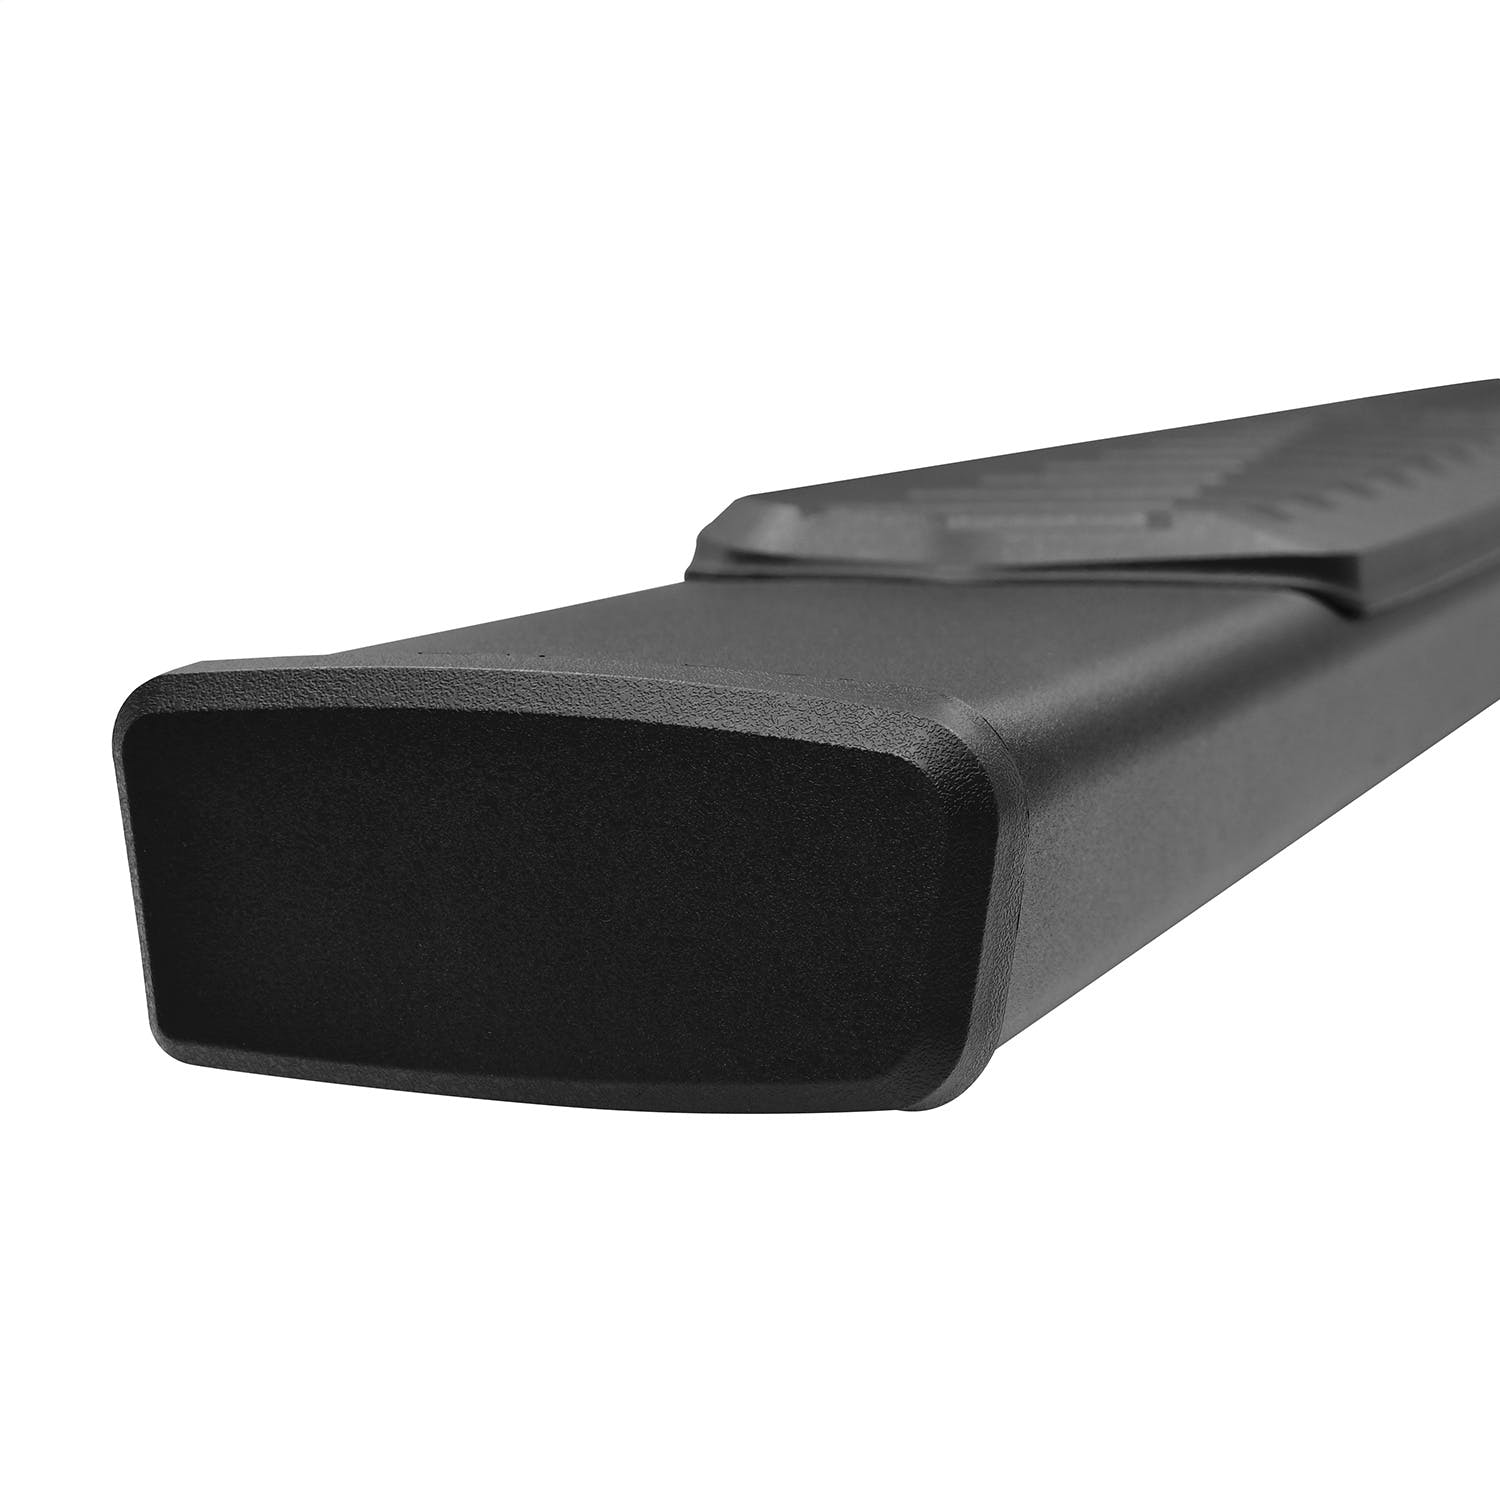 Westin Automotive 28-521055 R5 XD Nerf Step Bars, Black